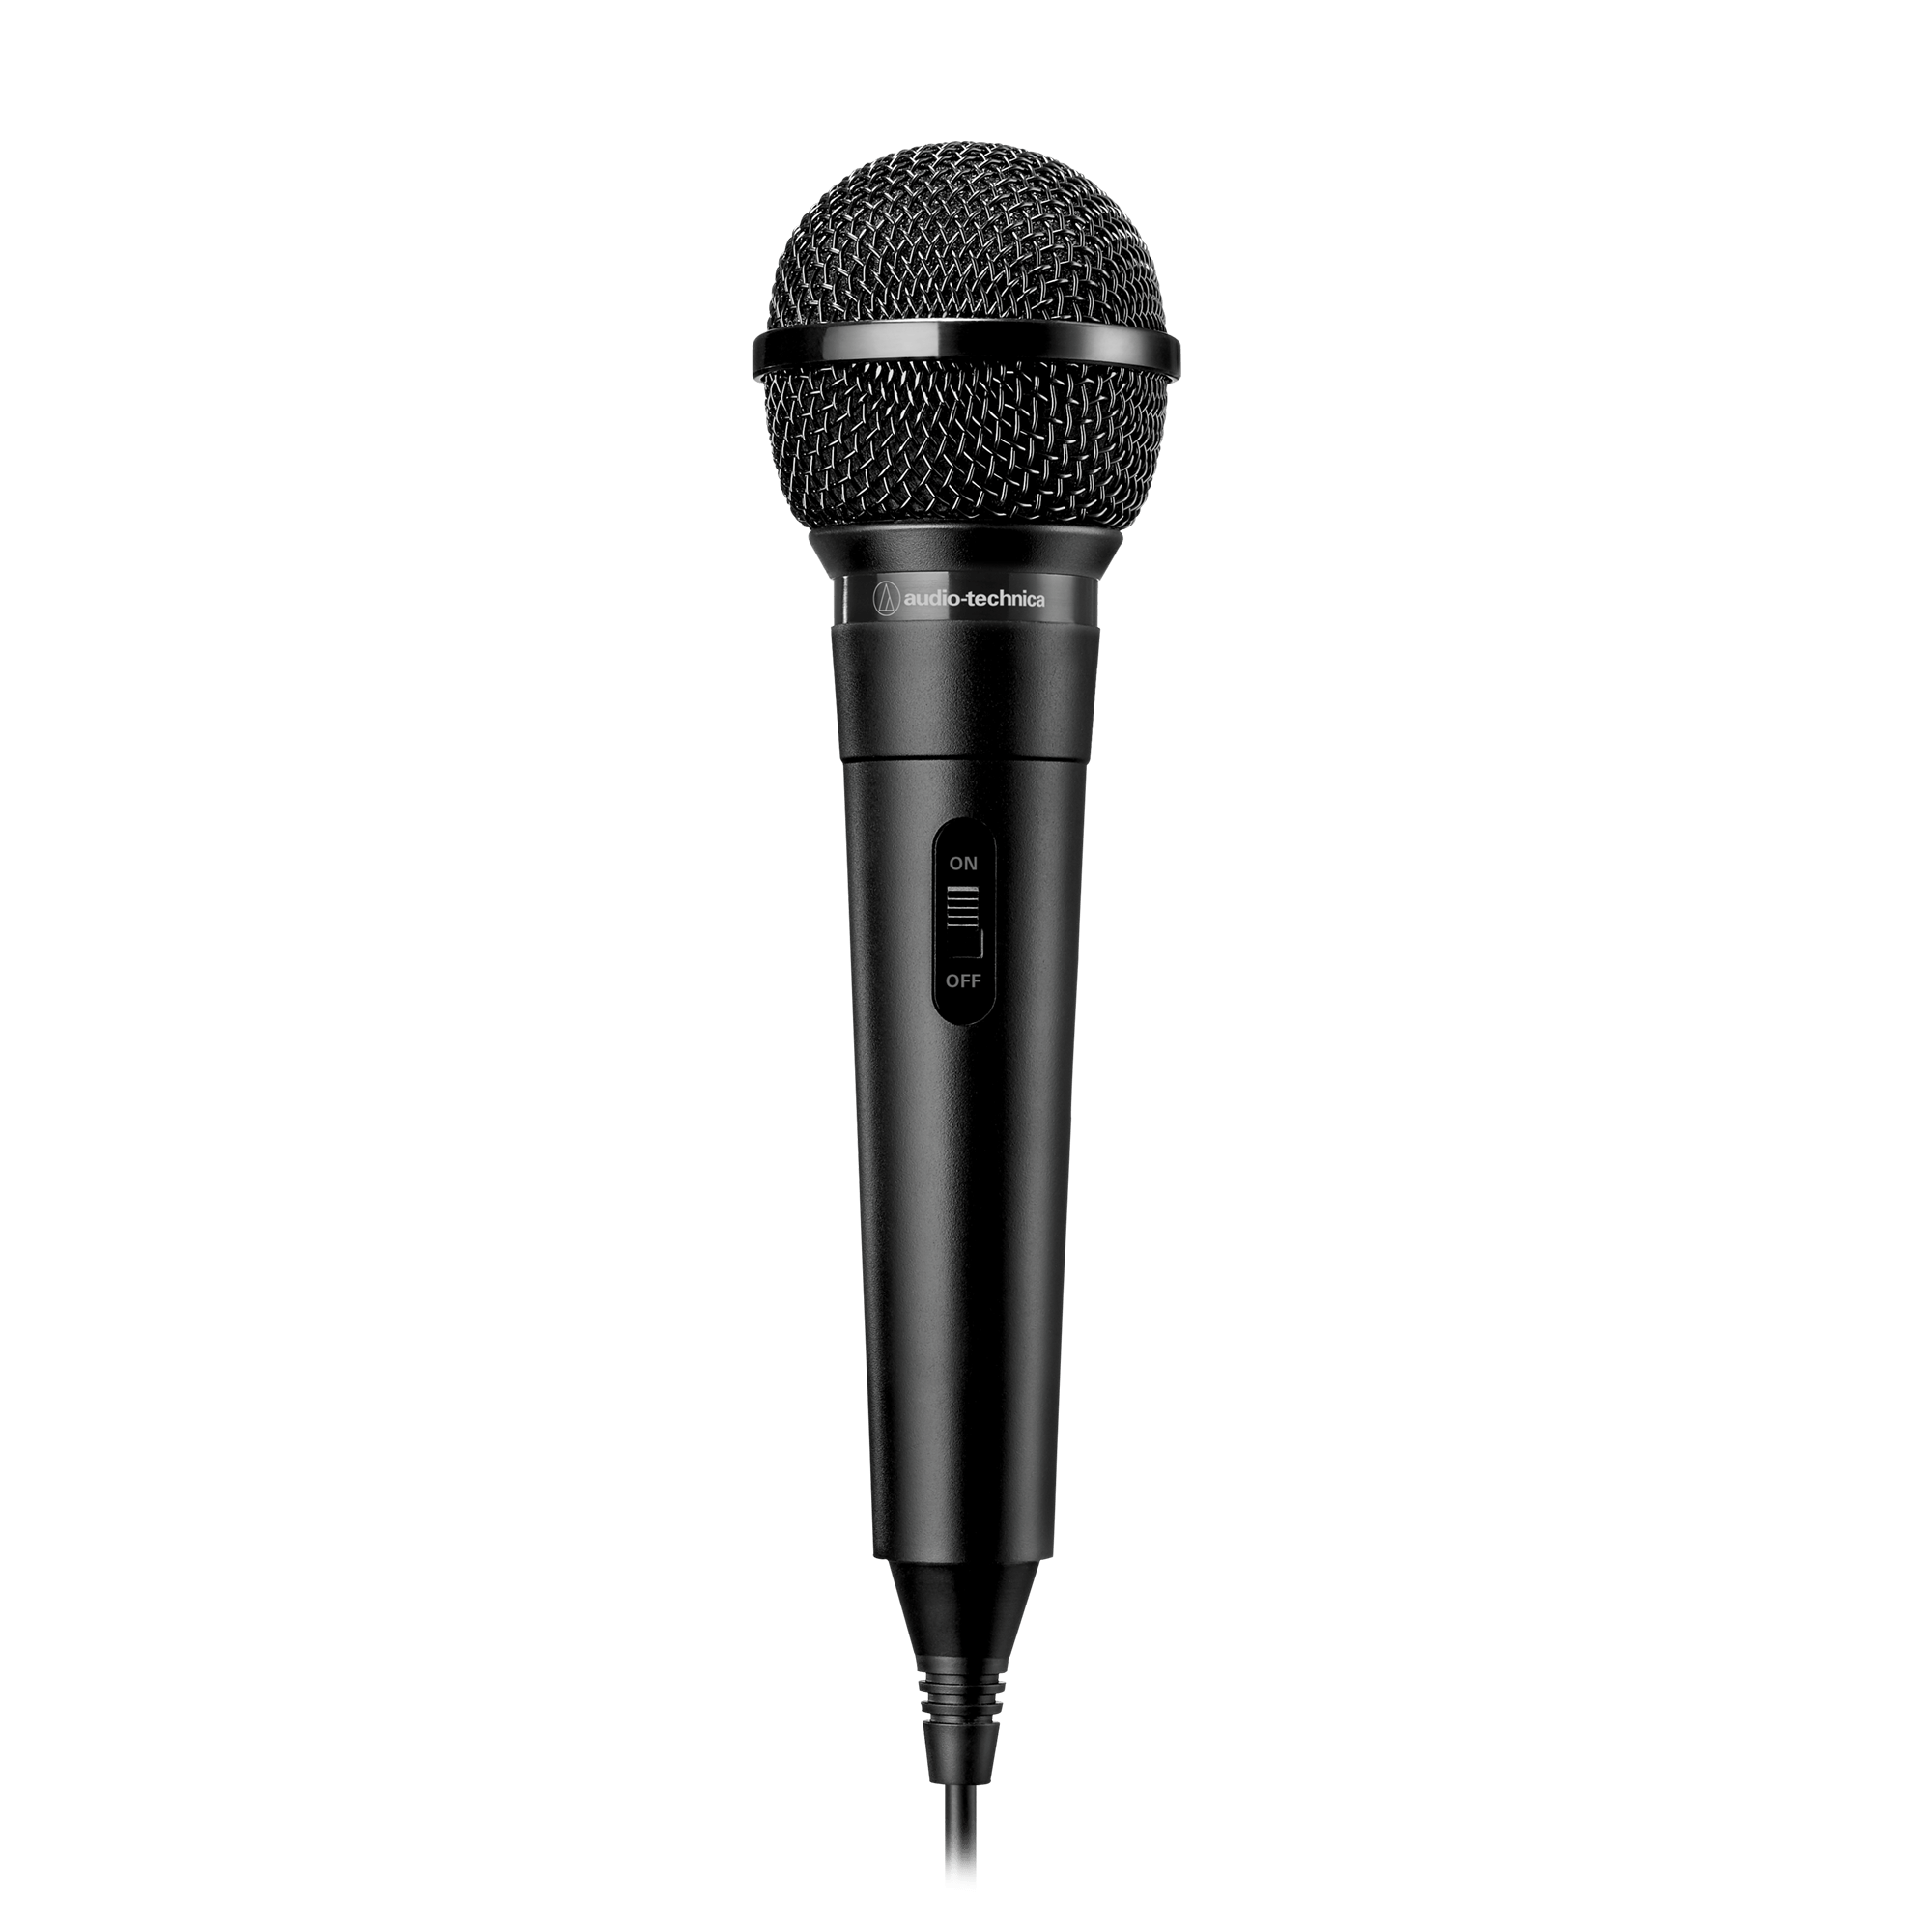 Neuropathie omringen tank ATR1100x Unidirectional Dynamic Vocal/Instrument Microphone